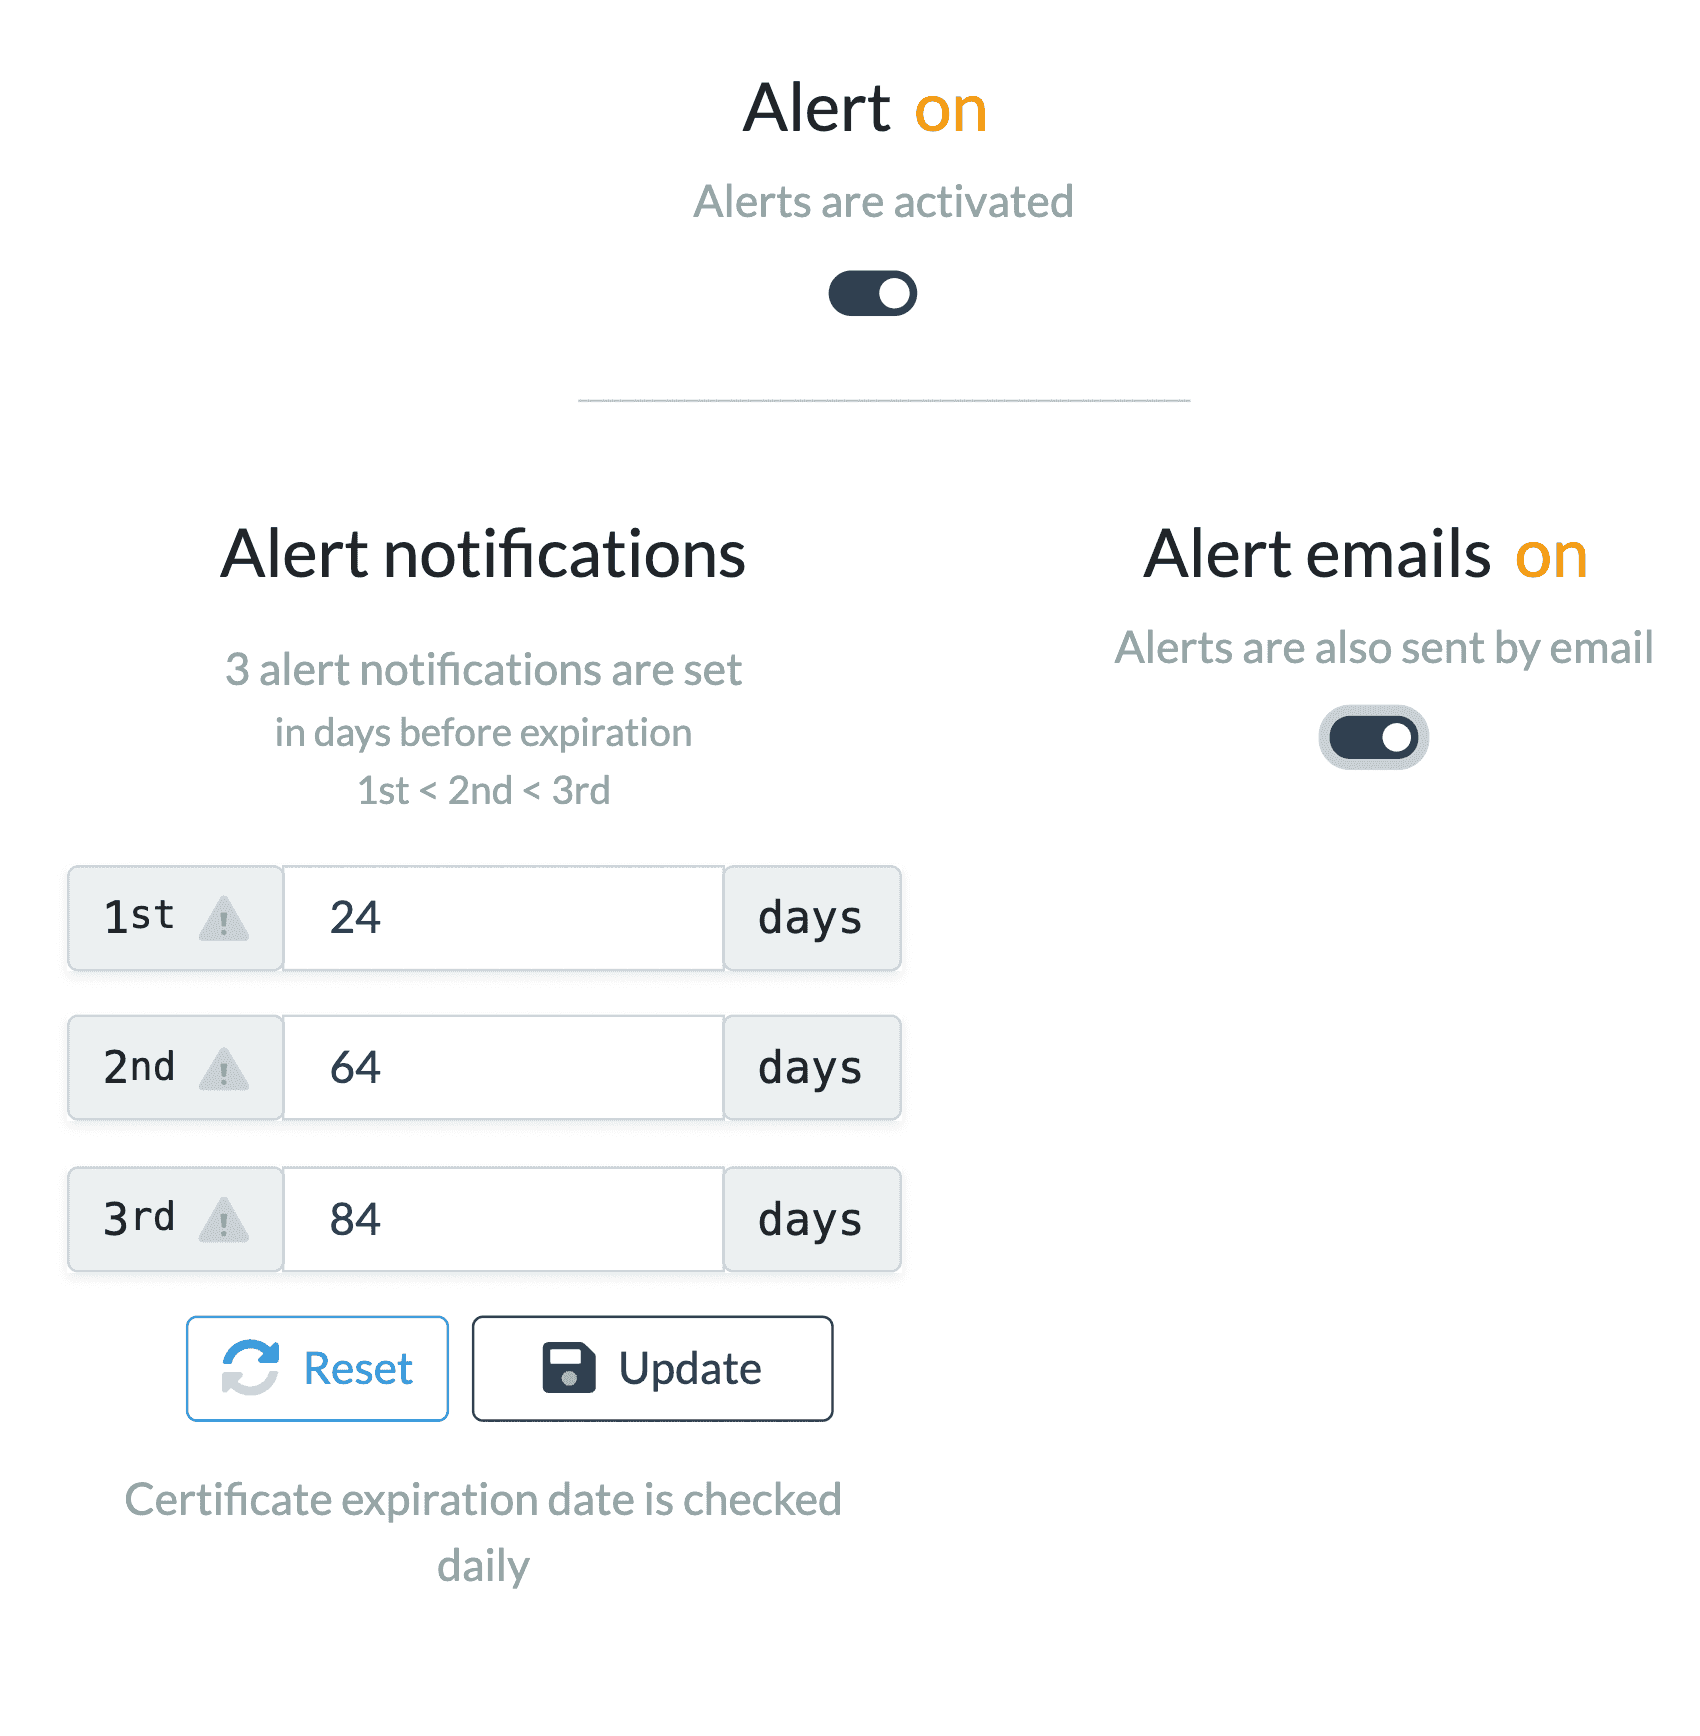 alert settings